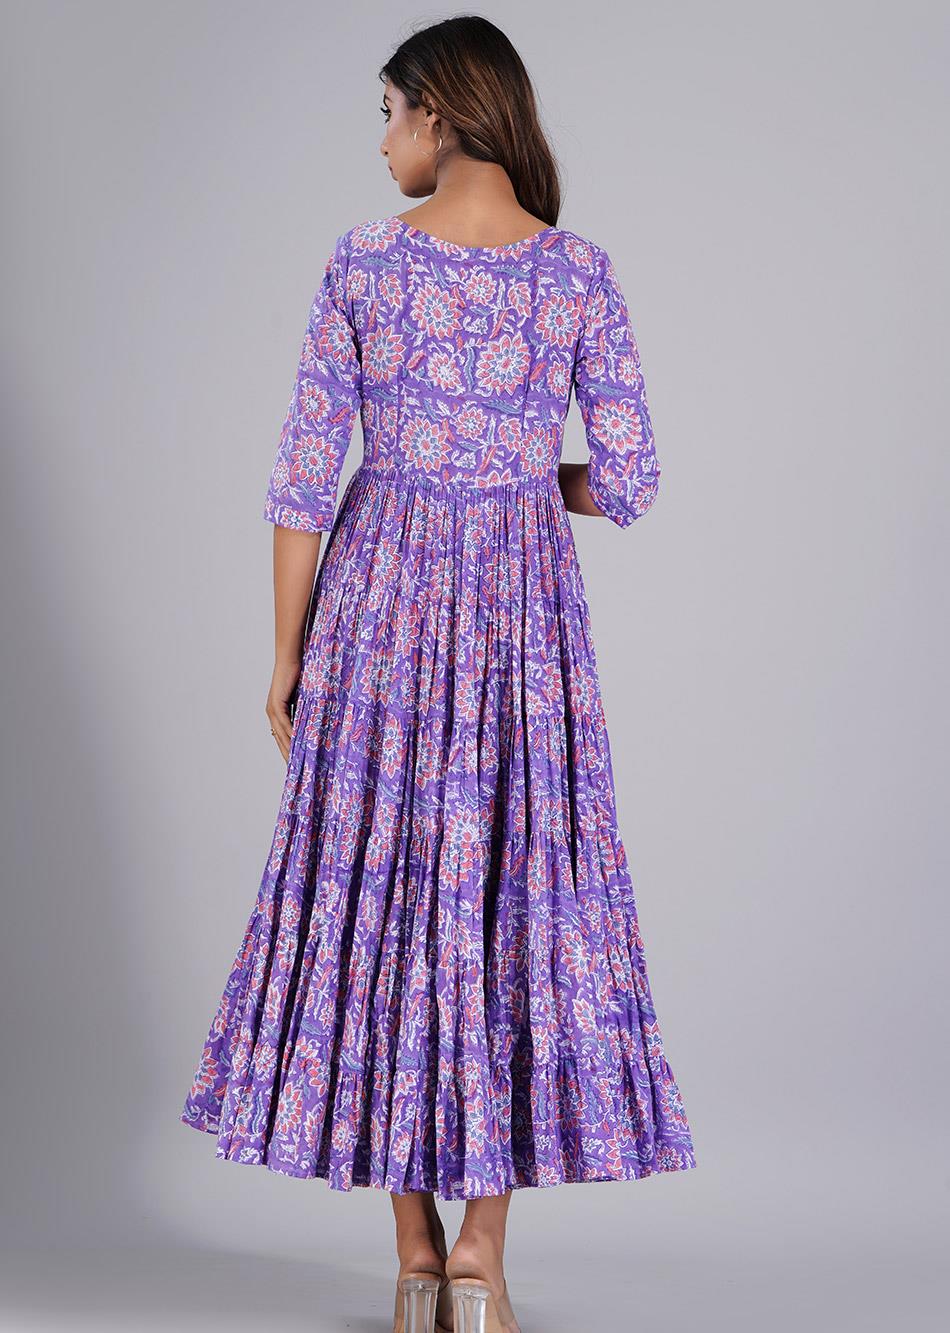 Lilac Printed Tiered Dress By Jovi Fashion